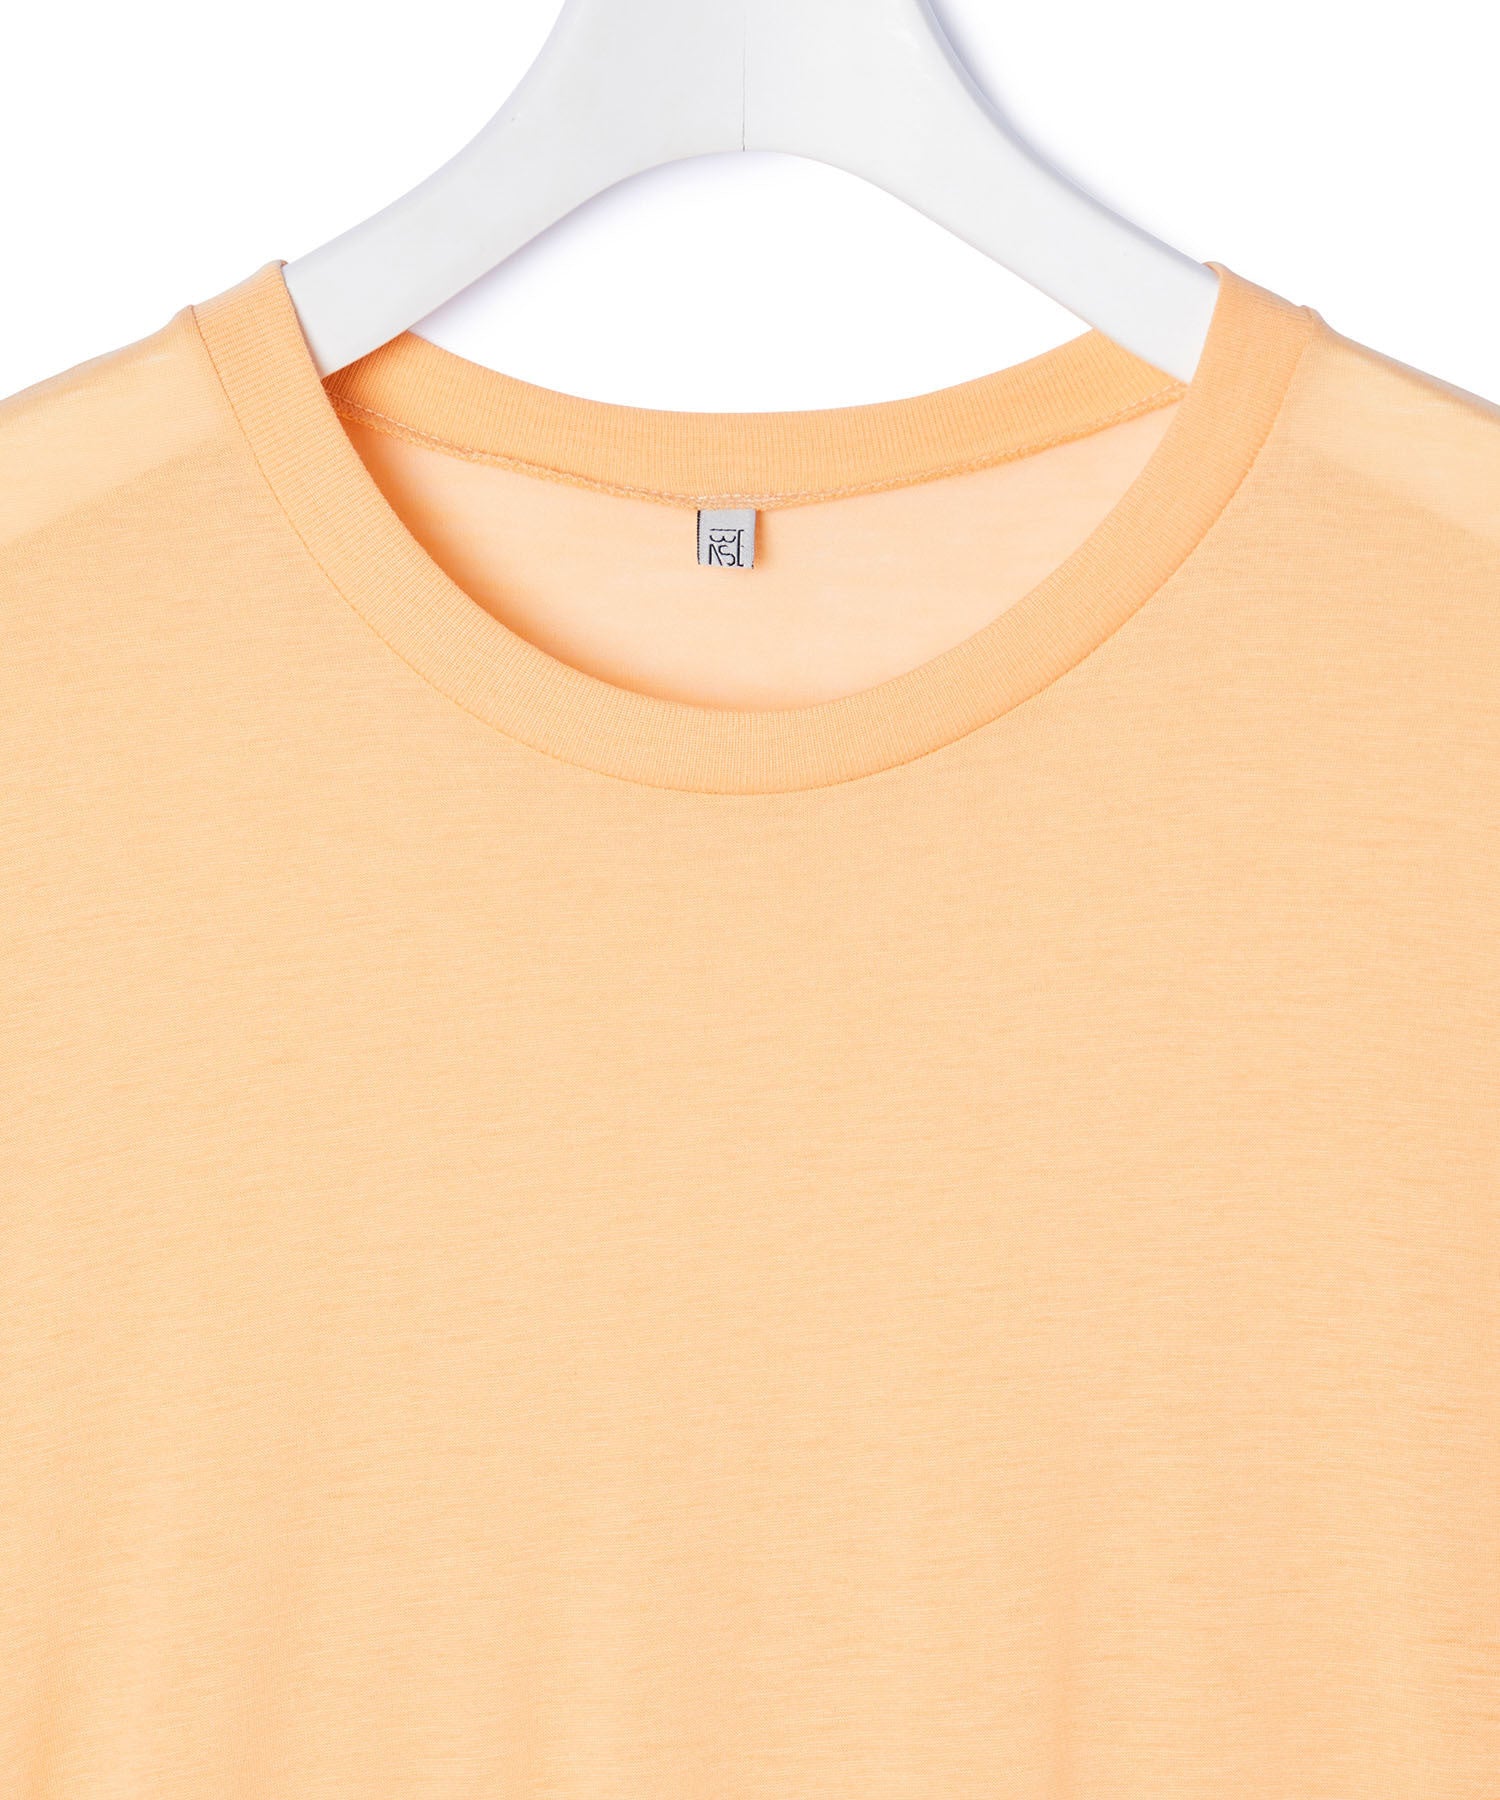 baserange tee shirt オレンジ